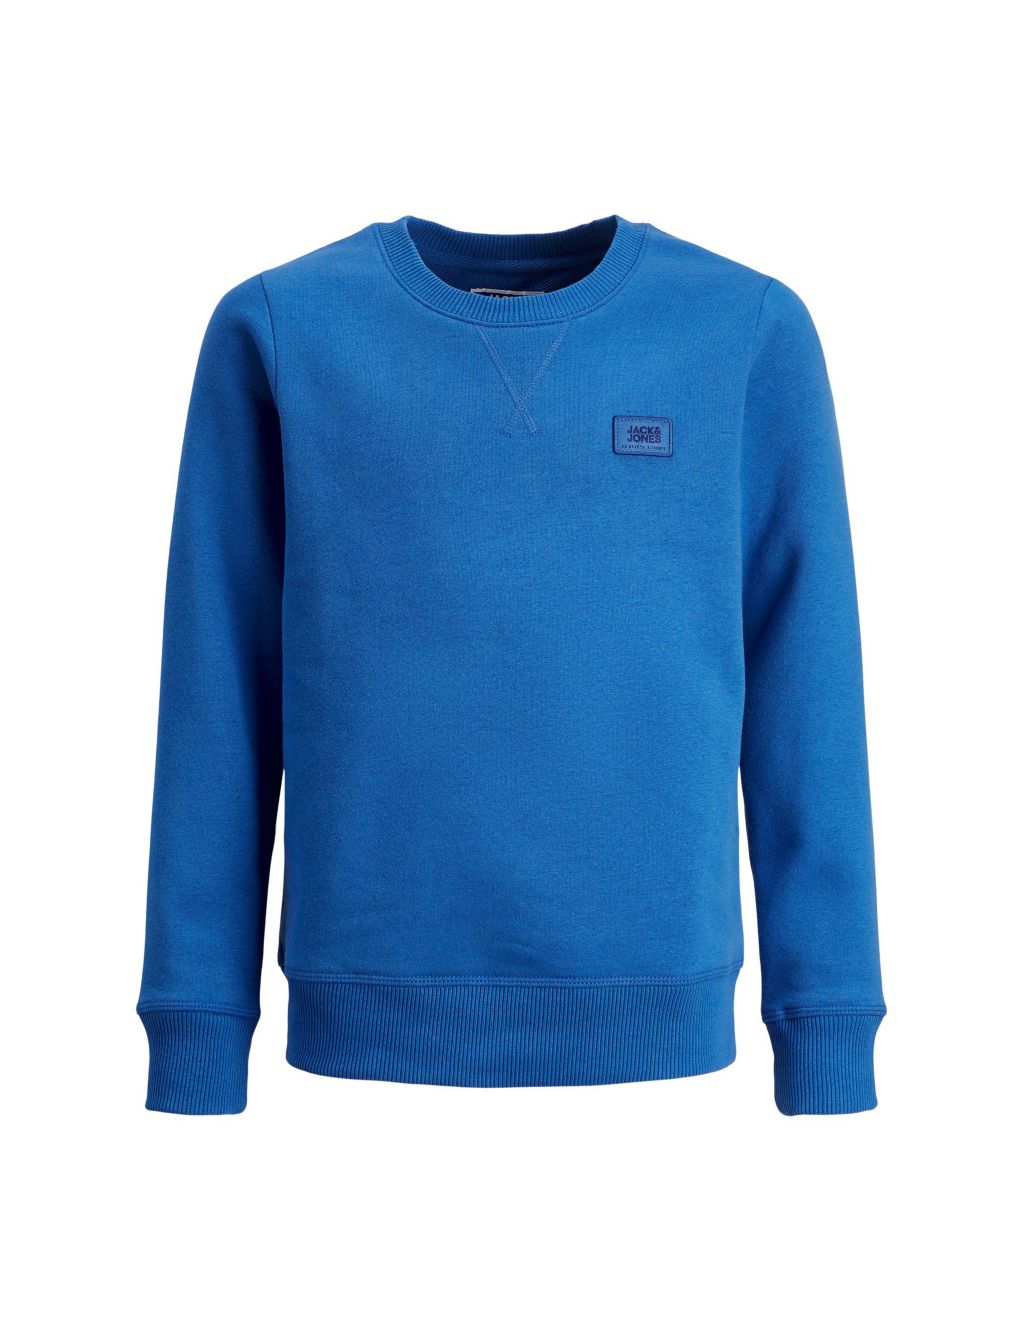 Cotton Rich Sweatshirt (8-16 Yrs) image 2